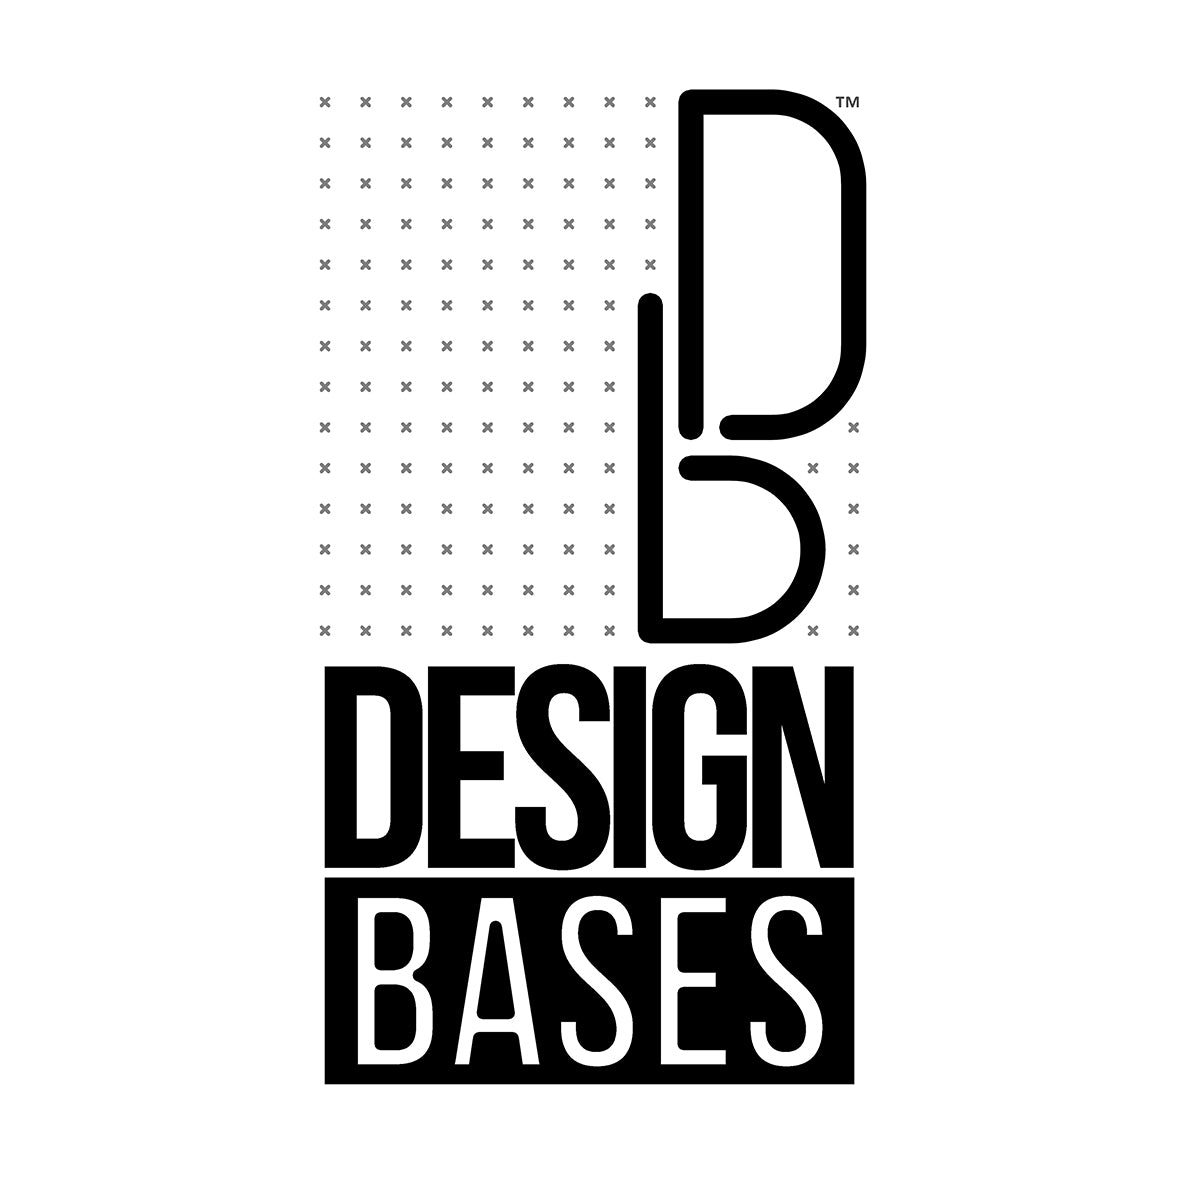 Design Bases - Pocket Notebook - Field Notes - Memo Book